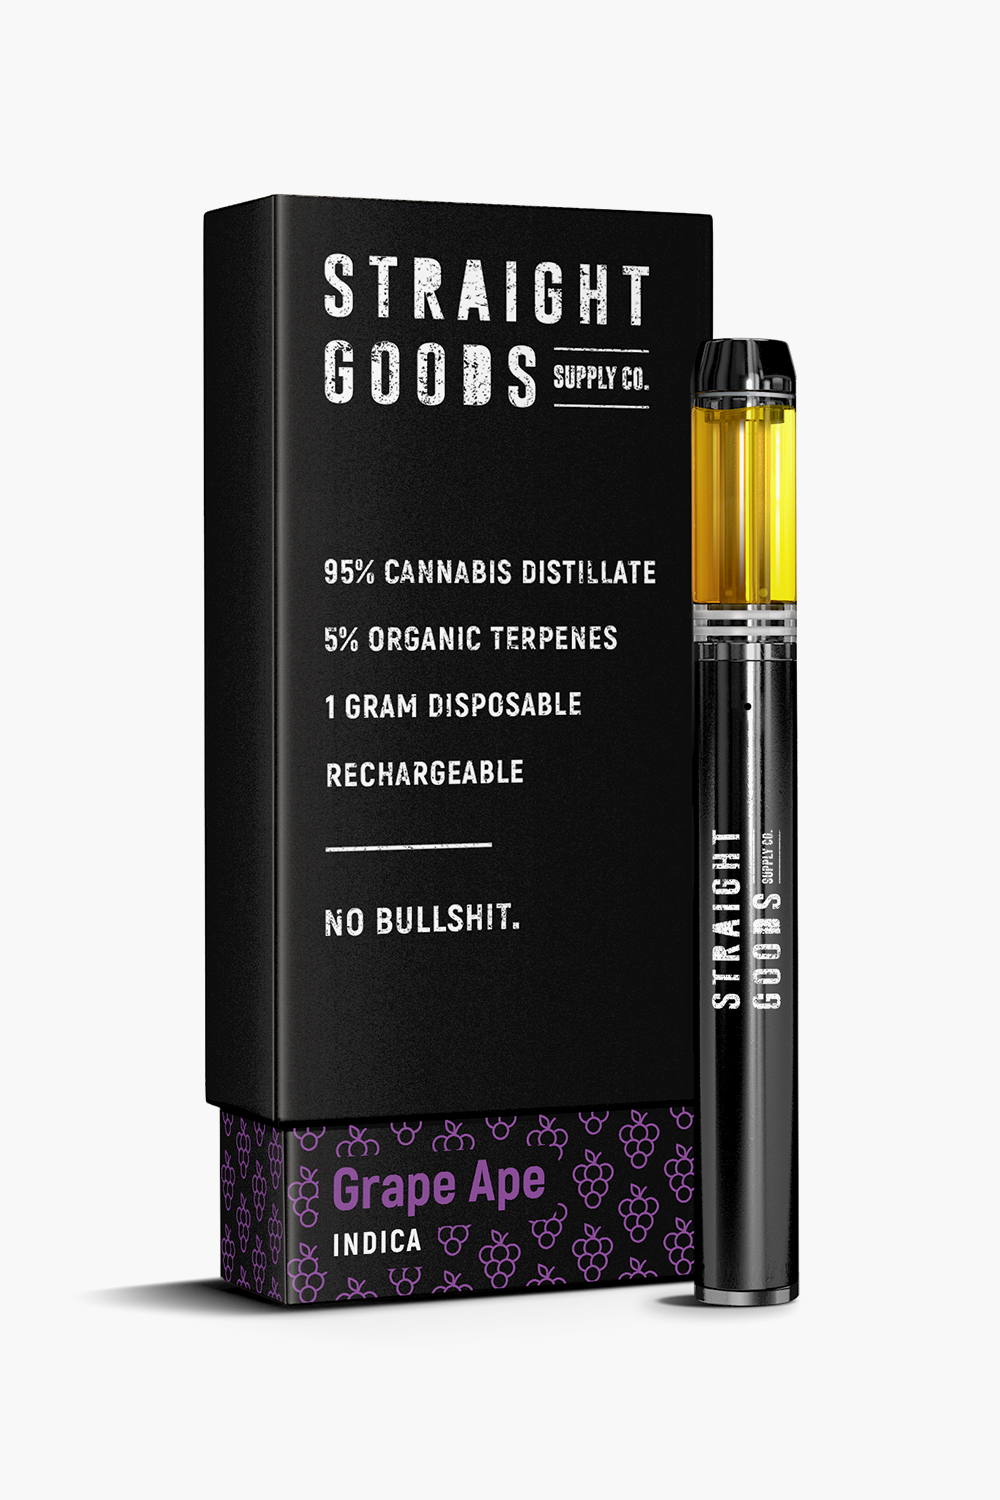 Buy Straight Goods - Grape Ape (INDICA) Disposable Pen 1GR at MMJ Express Online Shop